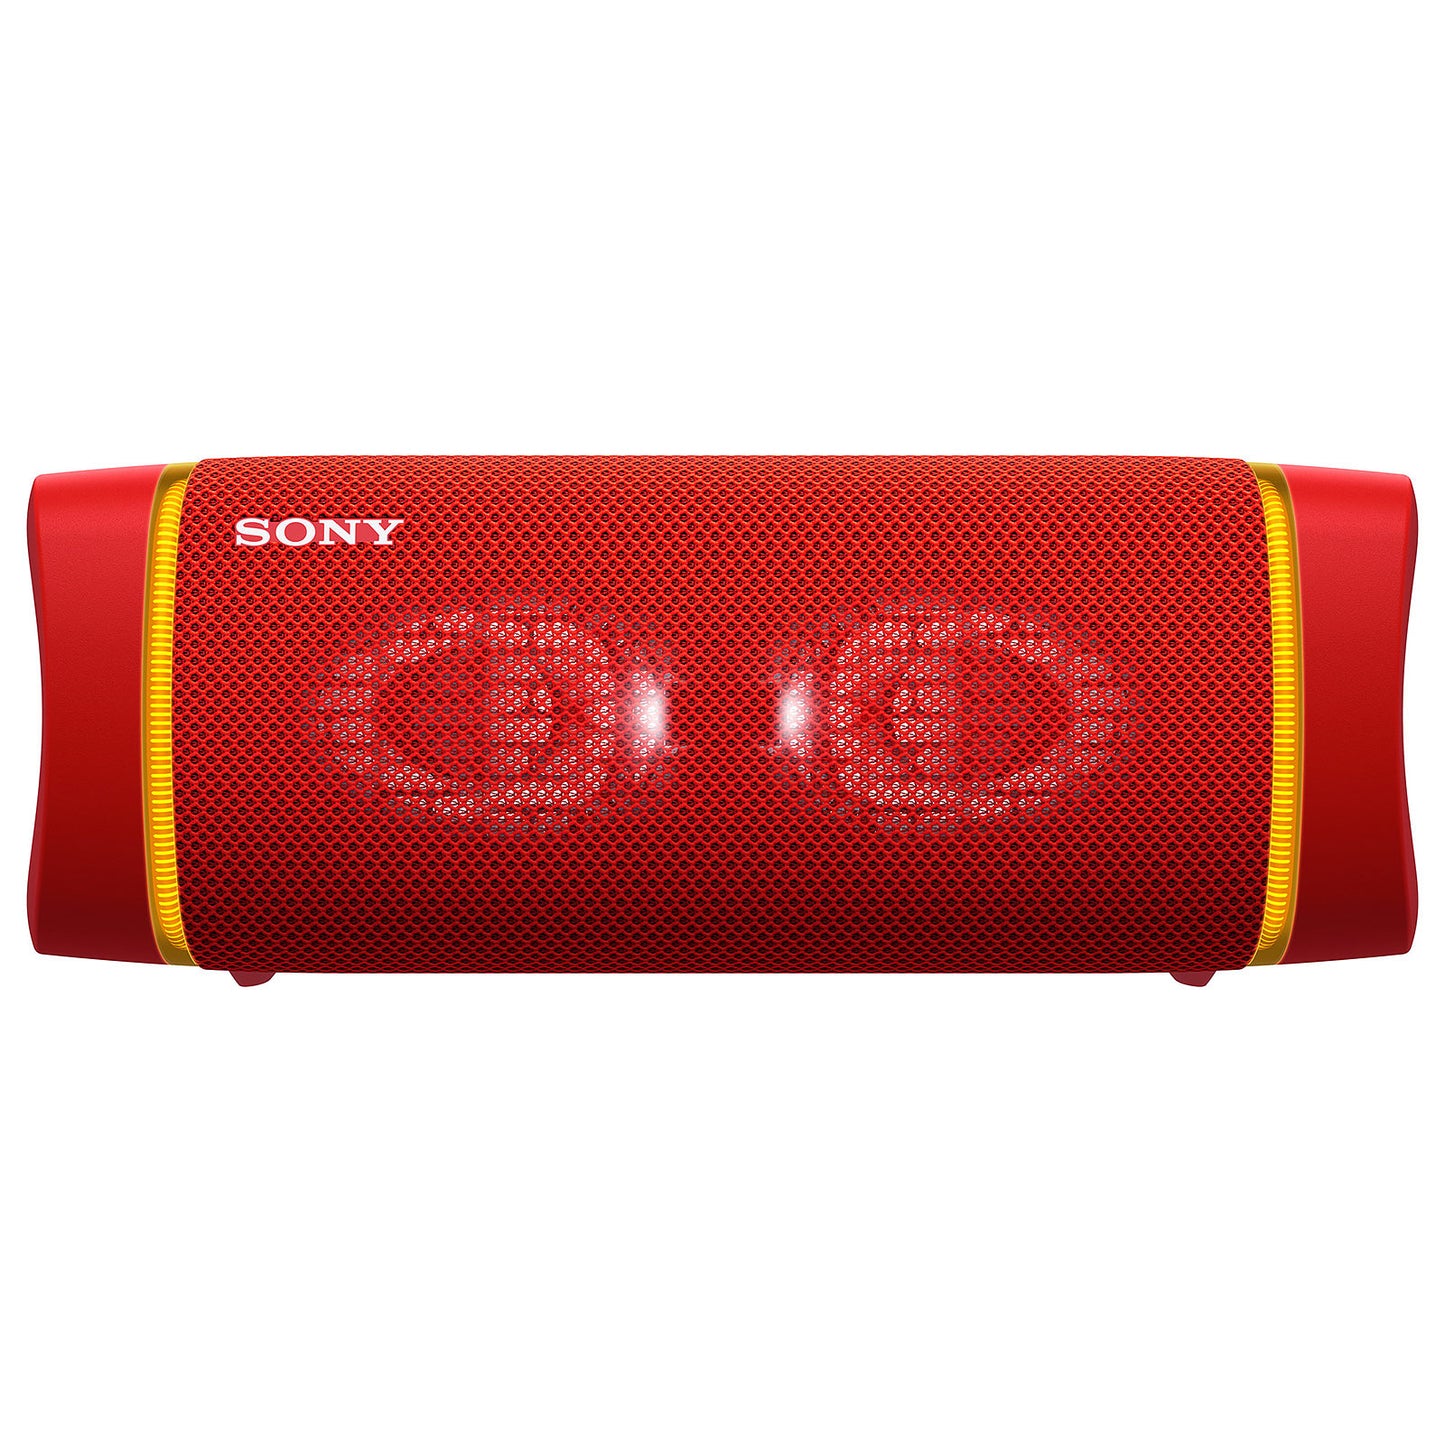 Sony-enceinte-sans-fil-extra-bass-srs-xb33-rouge